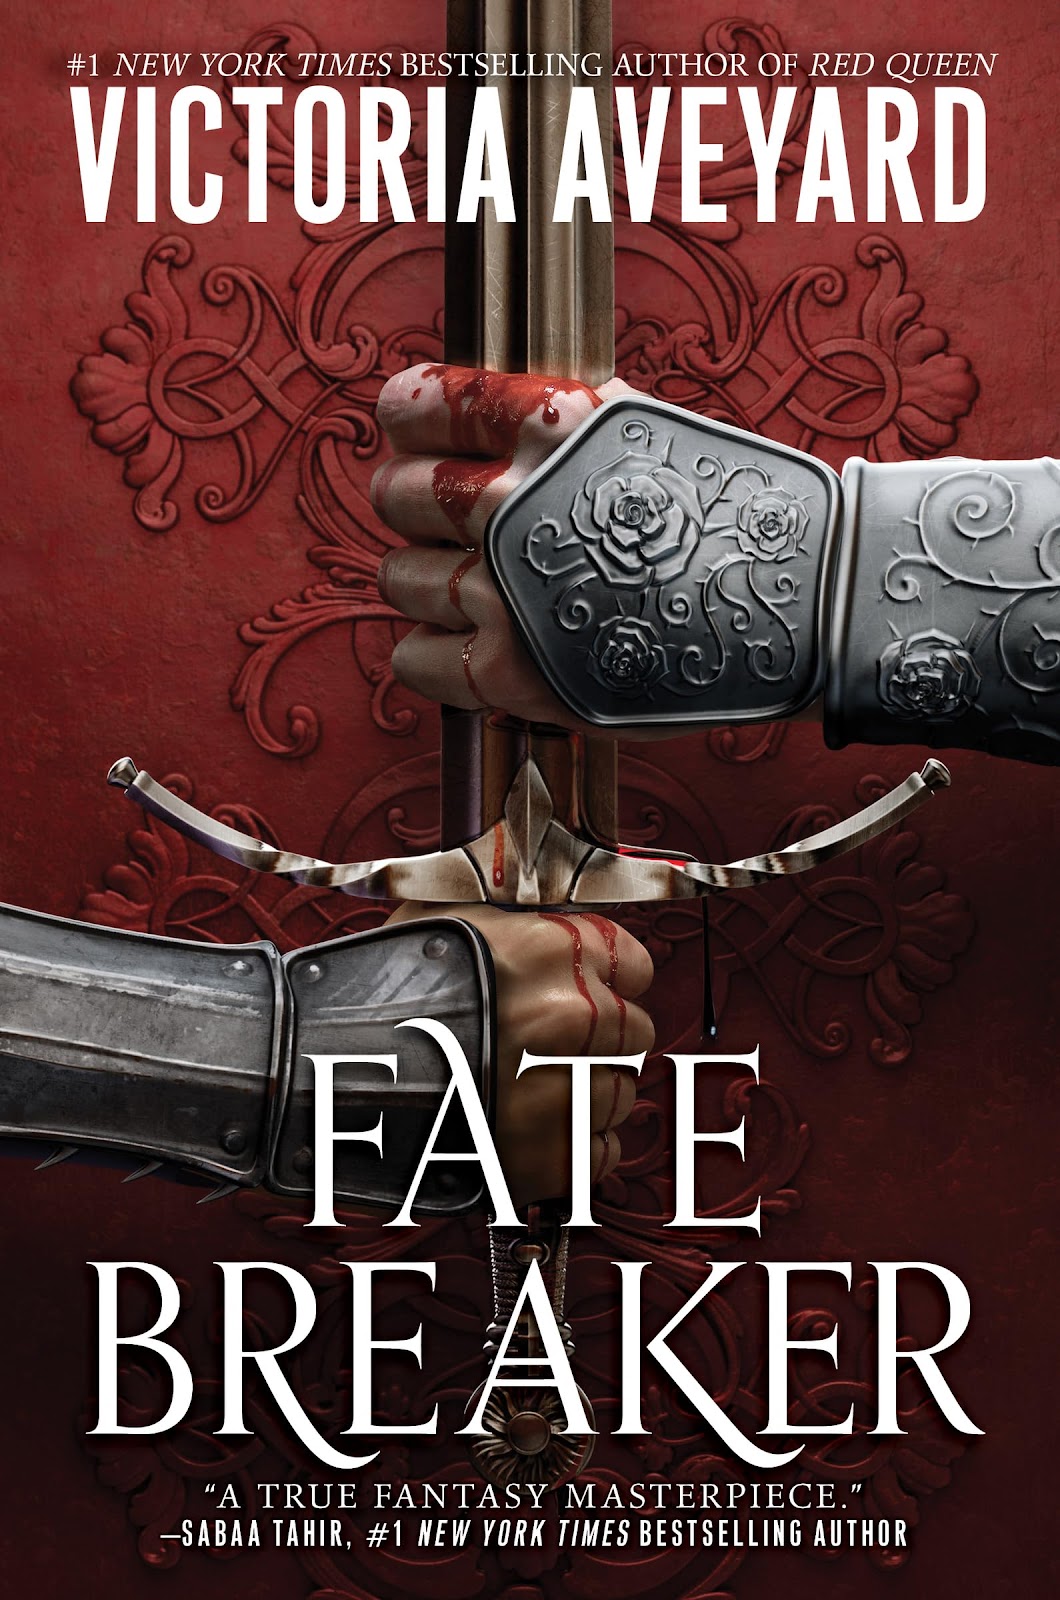 Fate Breaker by Victoria Aveyard